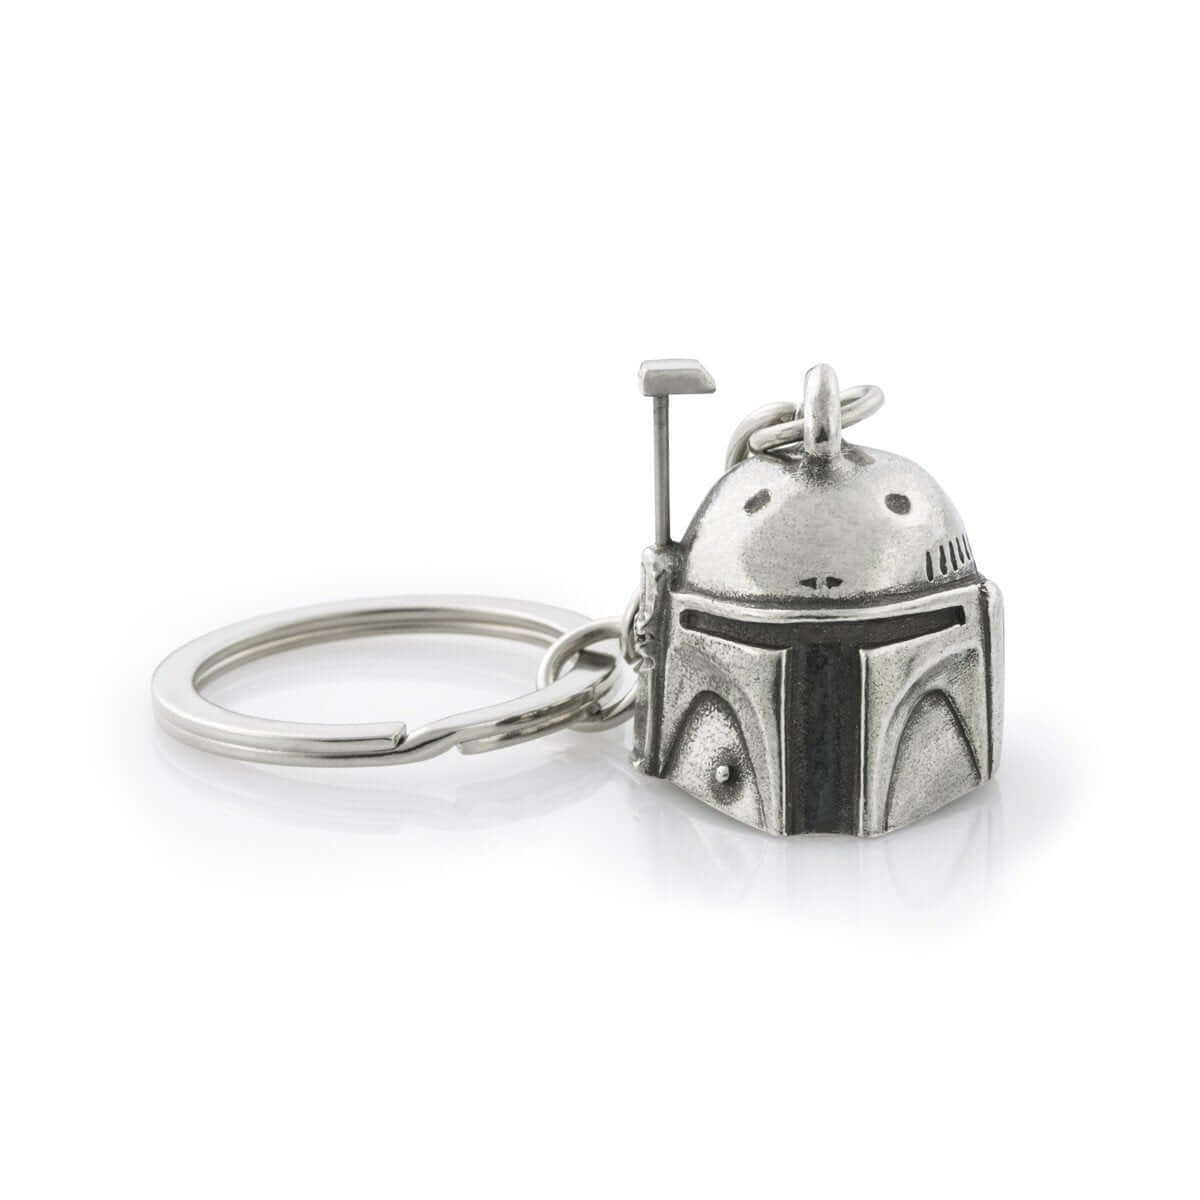 Star Wars Boba Fett Keychain - Collectible Gift